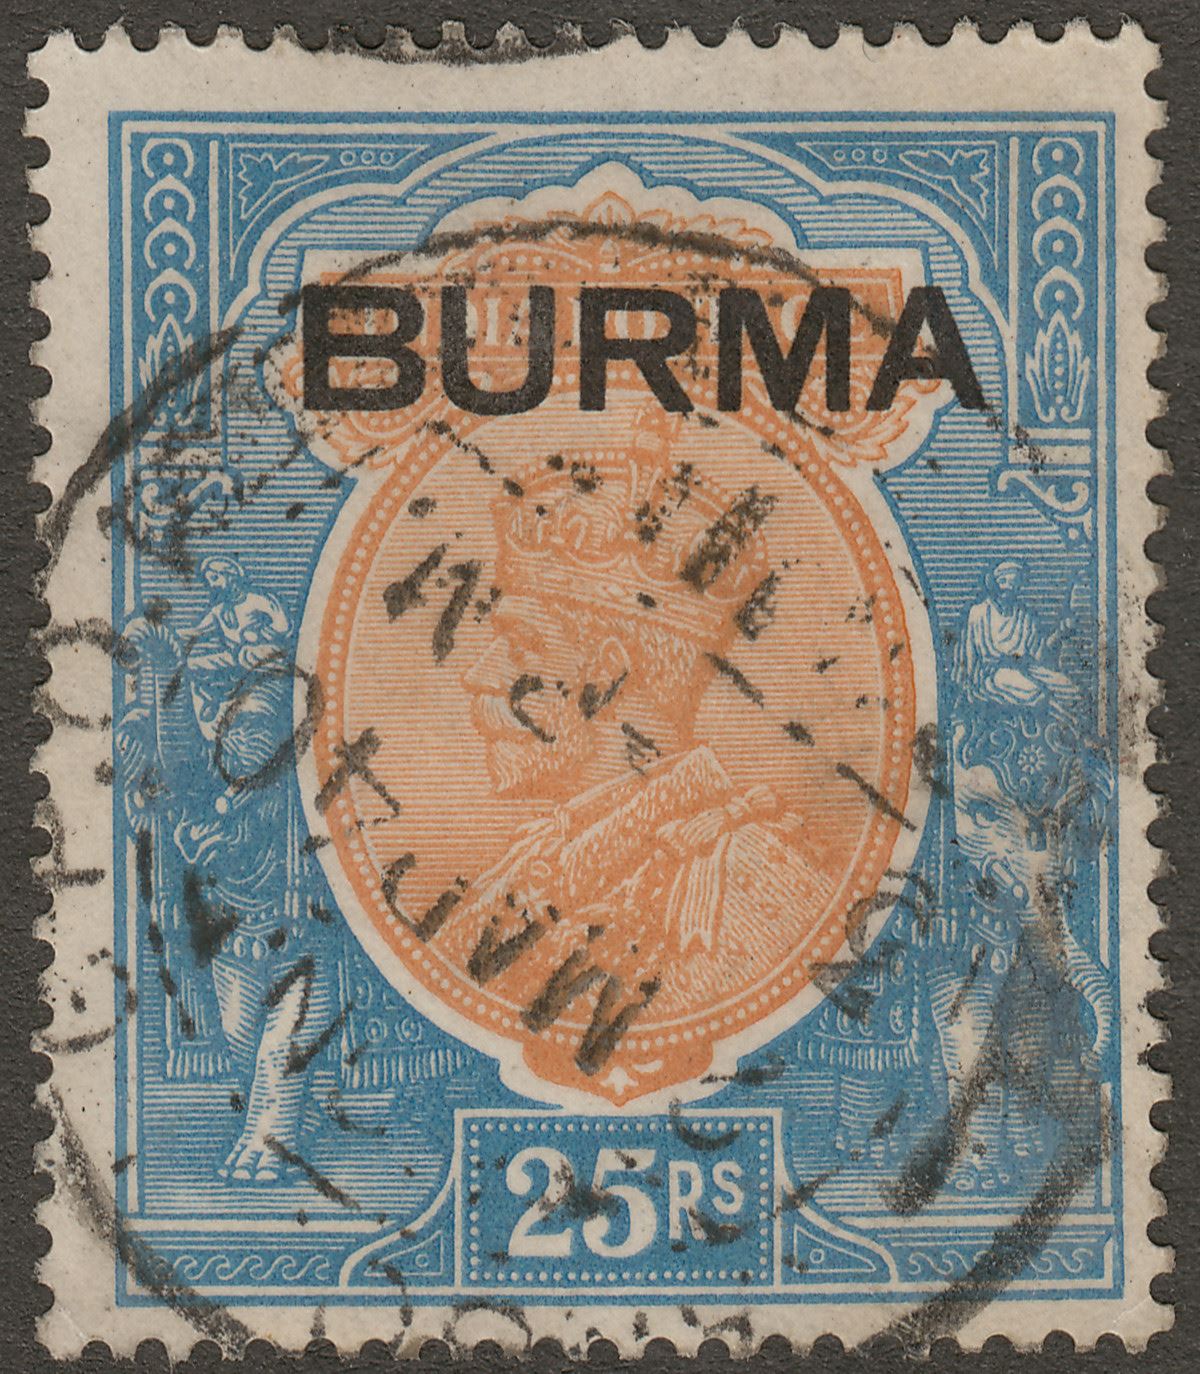 Burma 1937 KGV Overprint on India 25r Orange and Blue Used SG18 cat £600